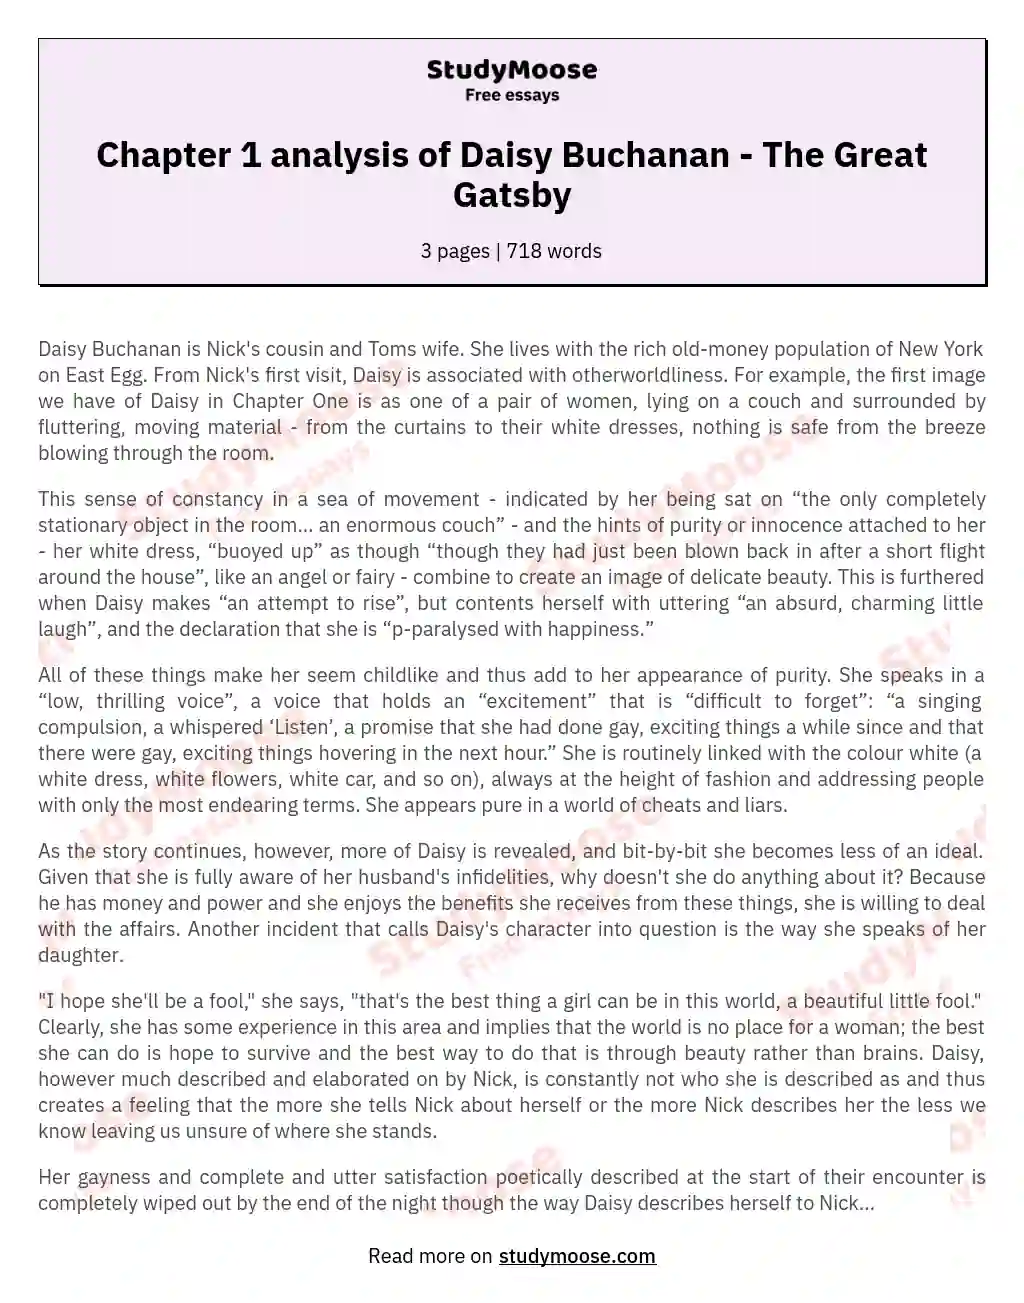 Chapter 1 analysis of Daisy Buchanan - The Great Gatsby essay